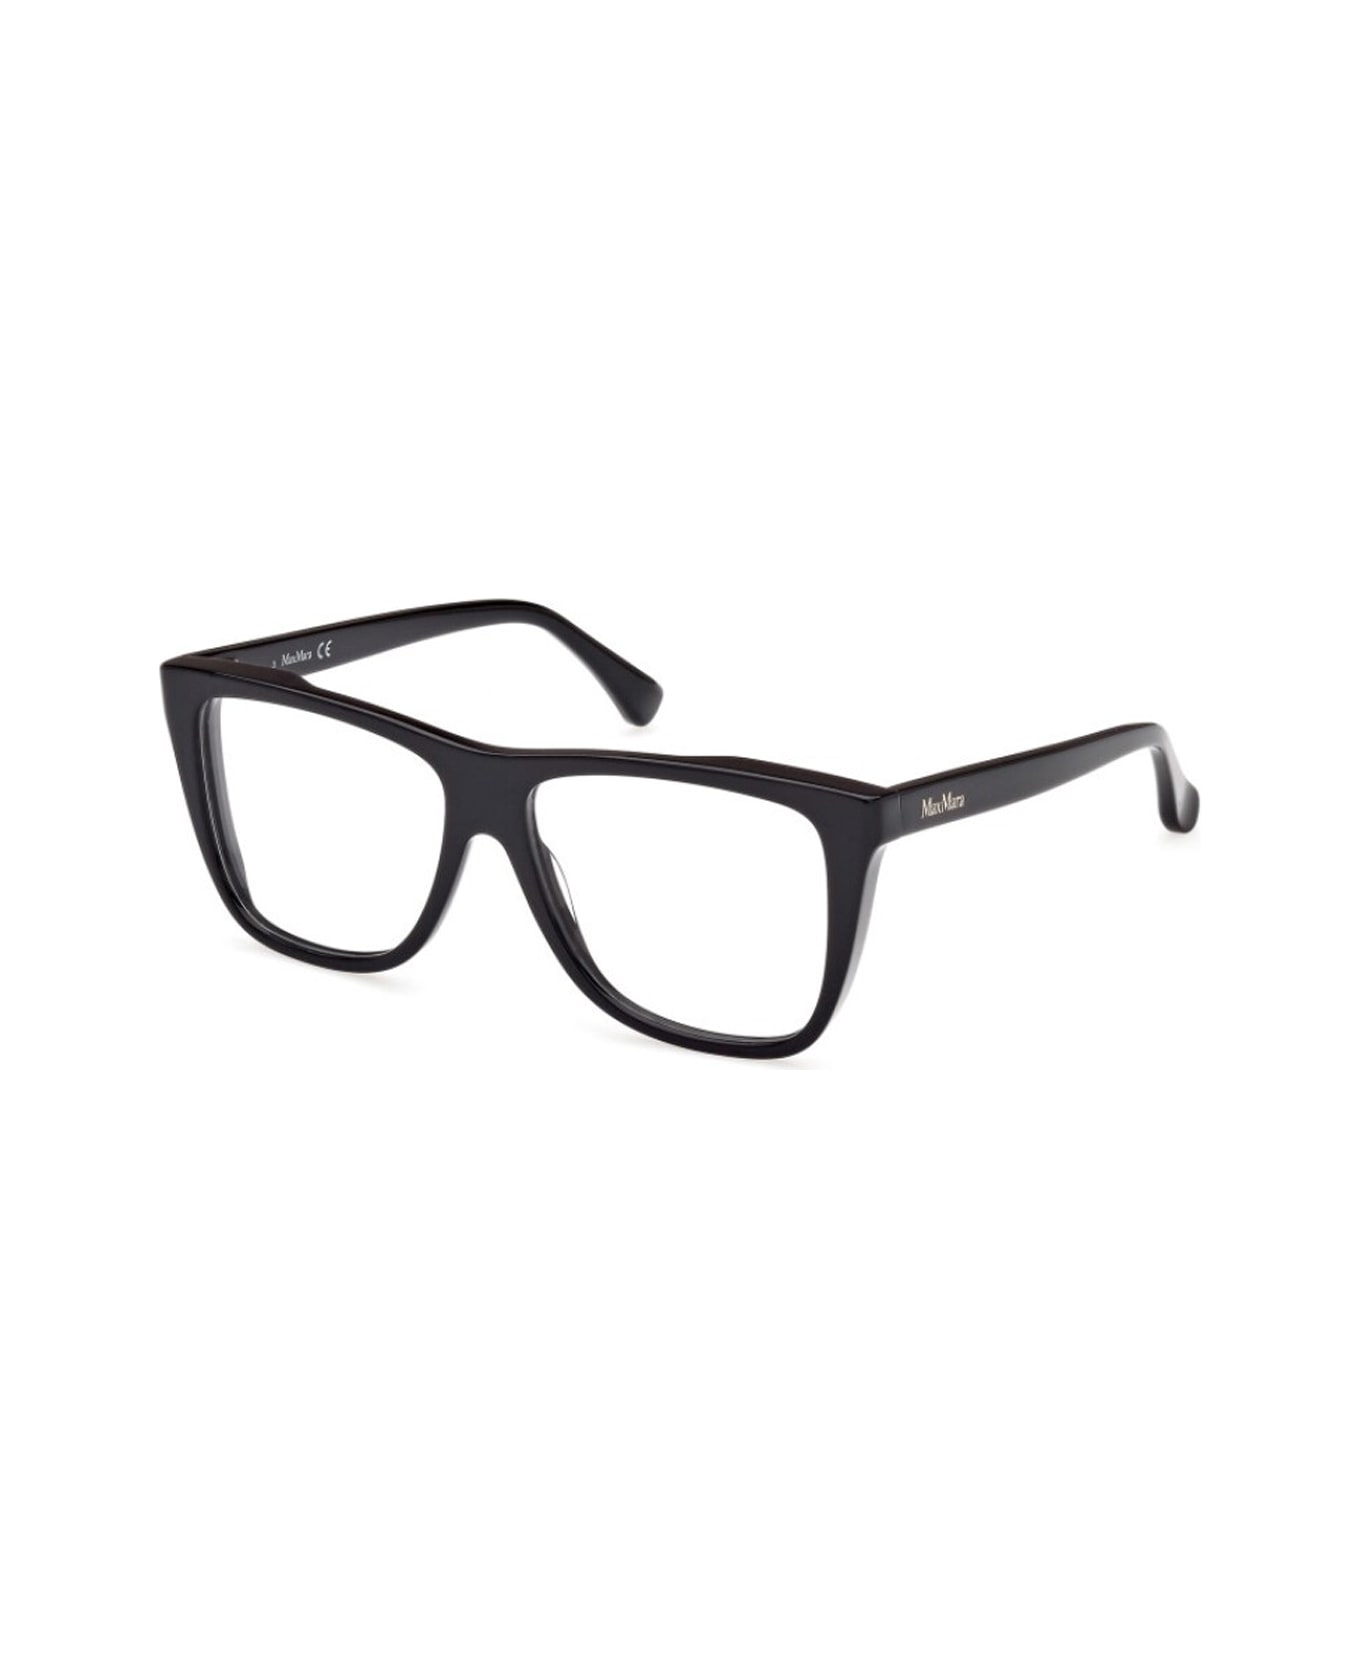 Max Mara Mm5096 001 Glasses - Nero アイウェア